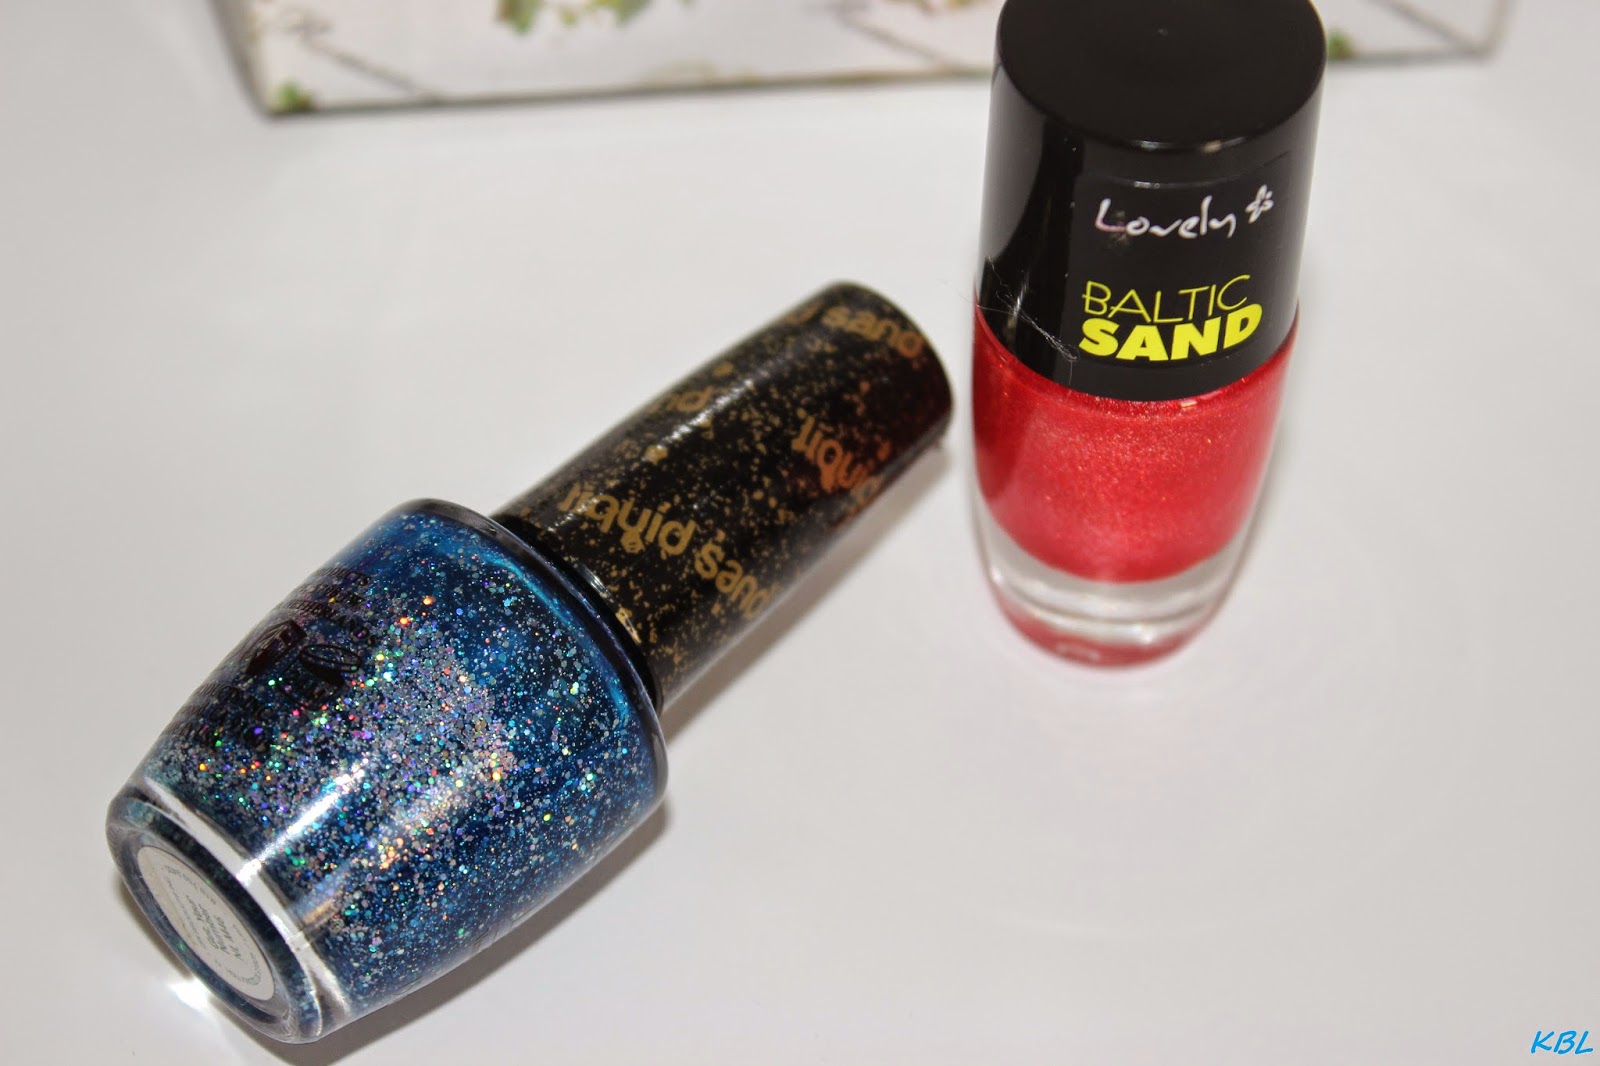 Kate S Beautyland Tanie Rozwiazanie Opi Liquid Sand Vs Lovely Baltic Sand